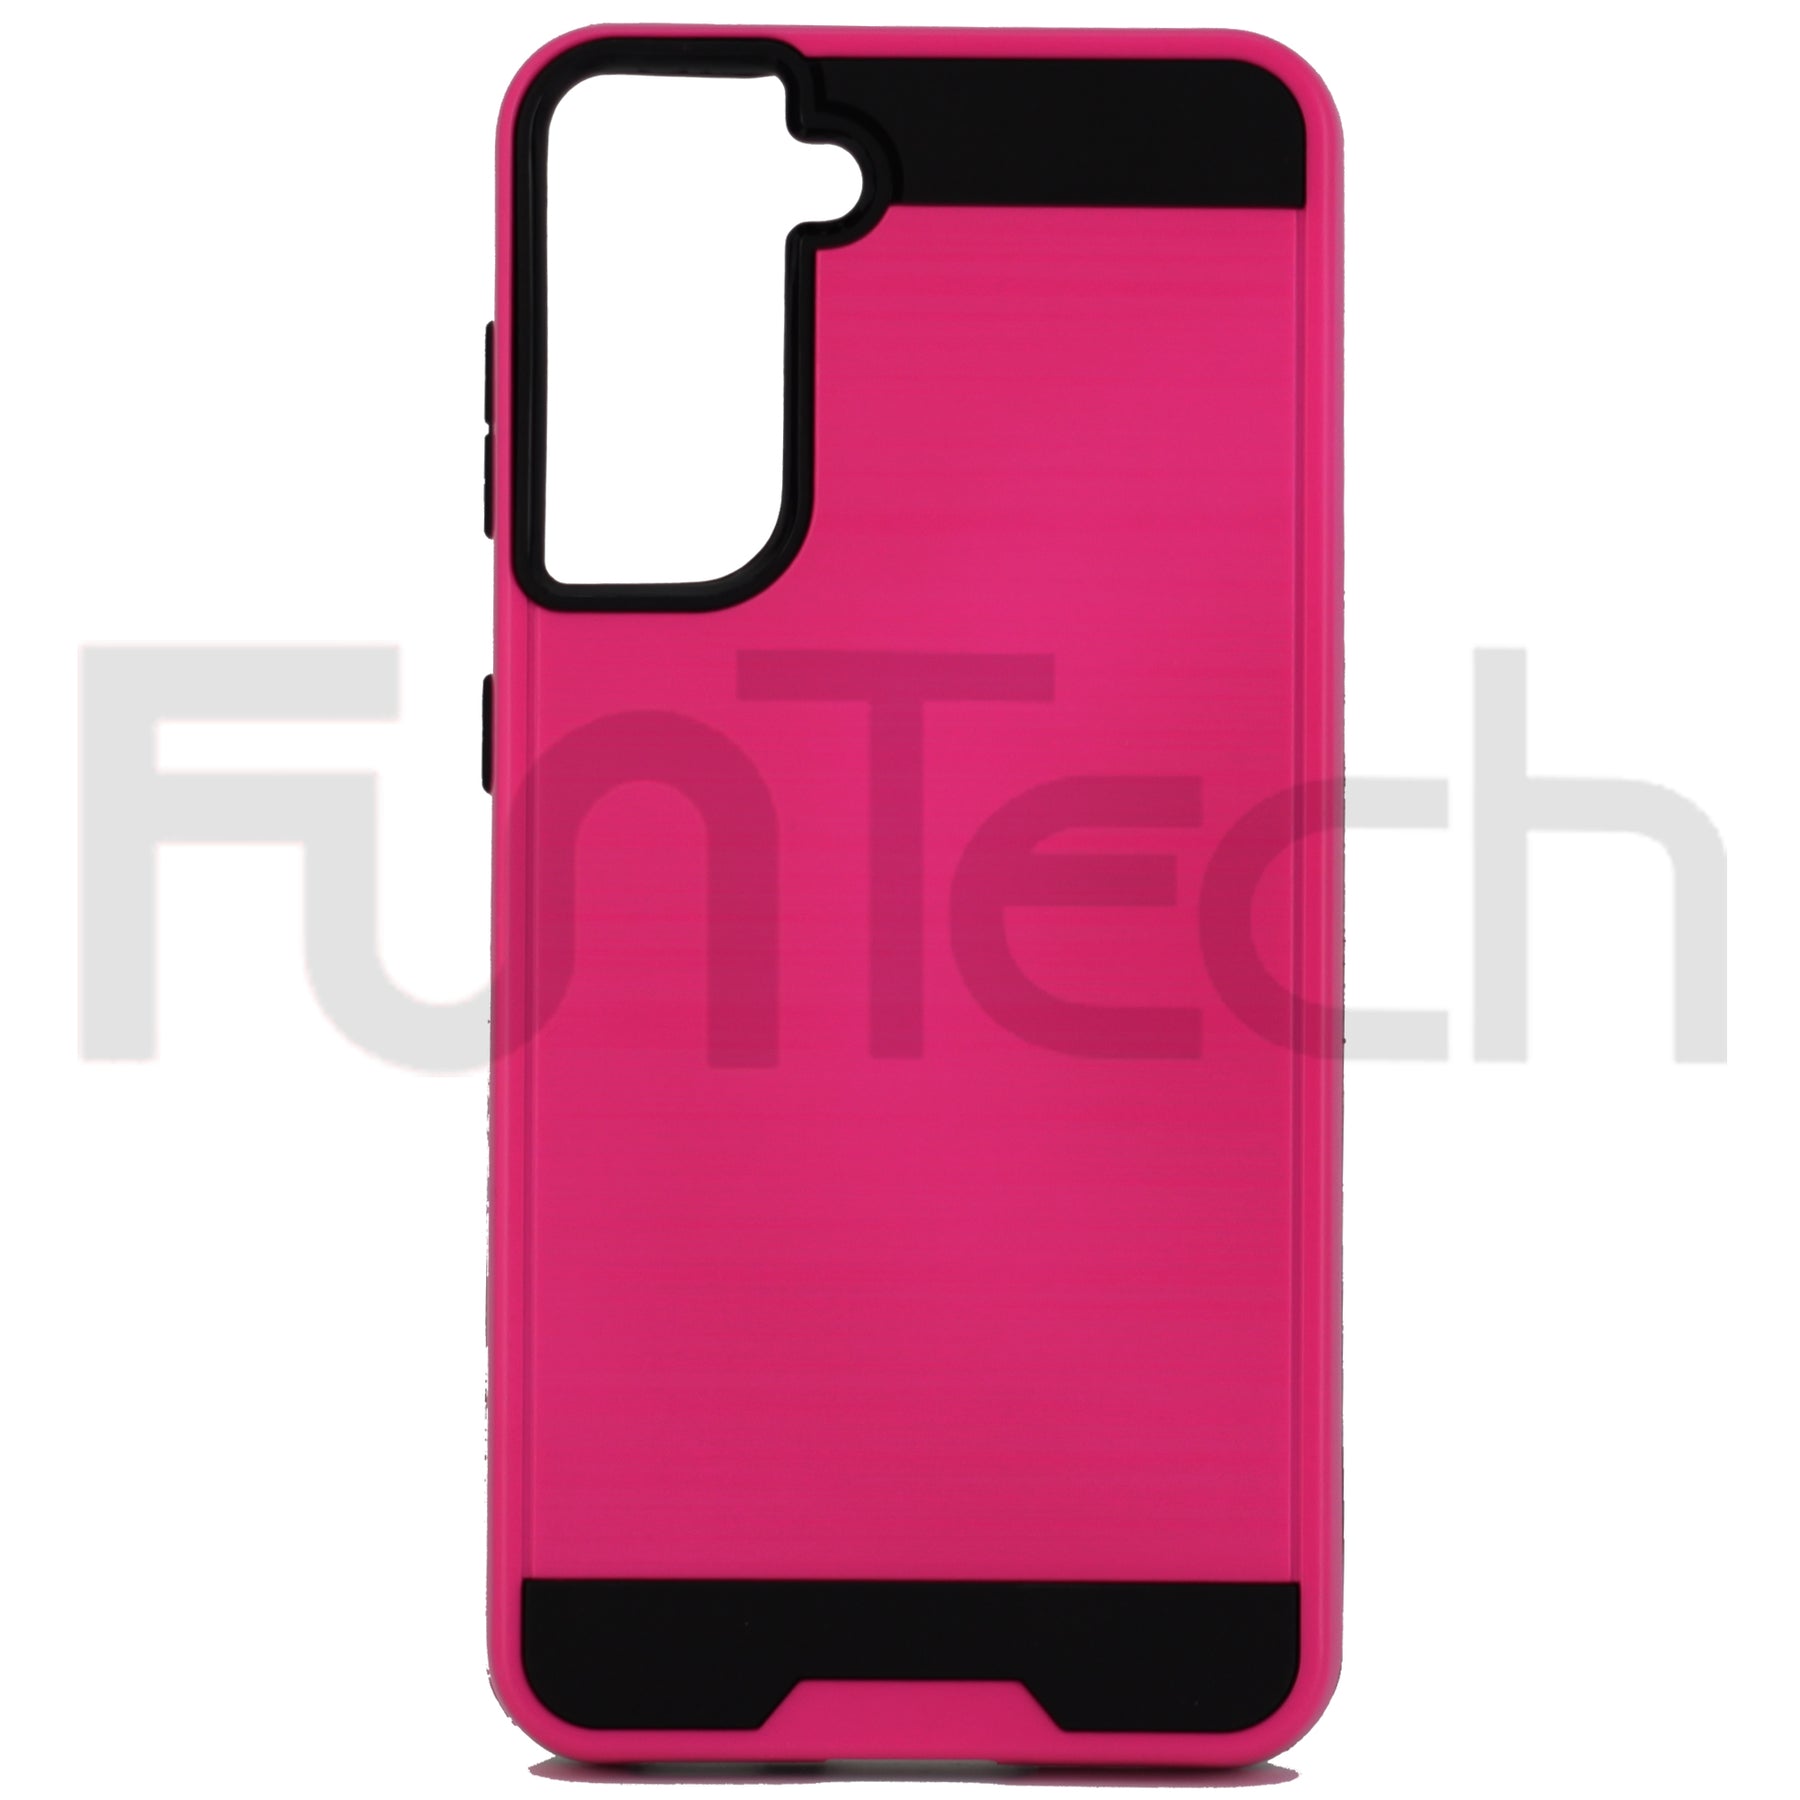 Samsung S21, Slim Armor Case, Color Pink.